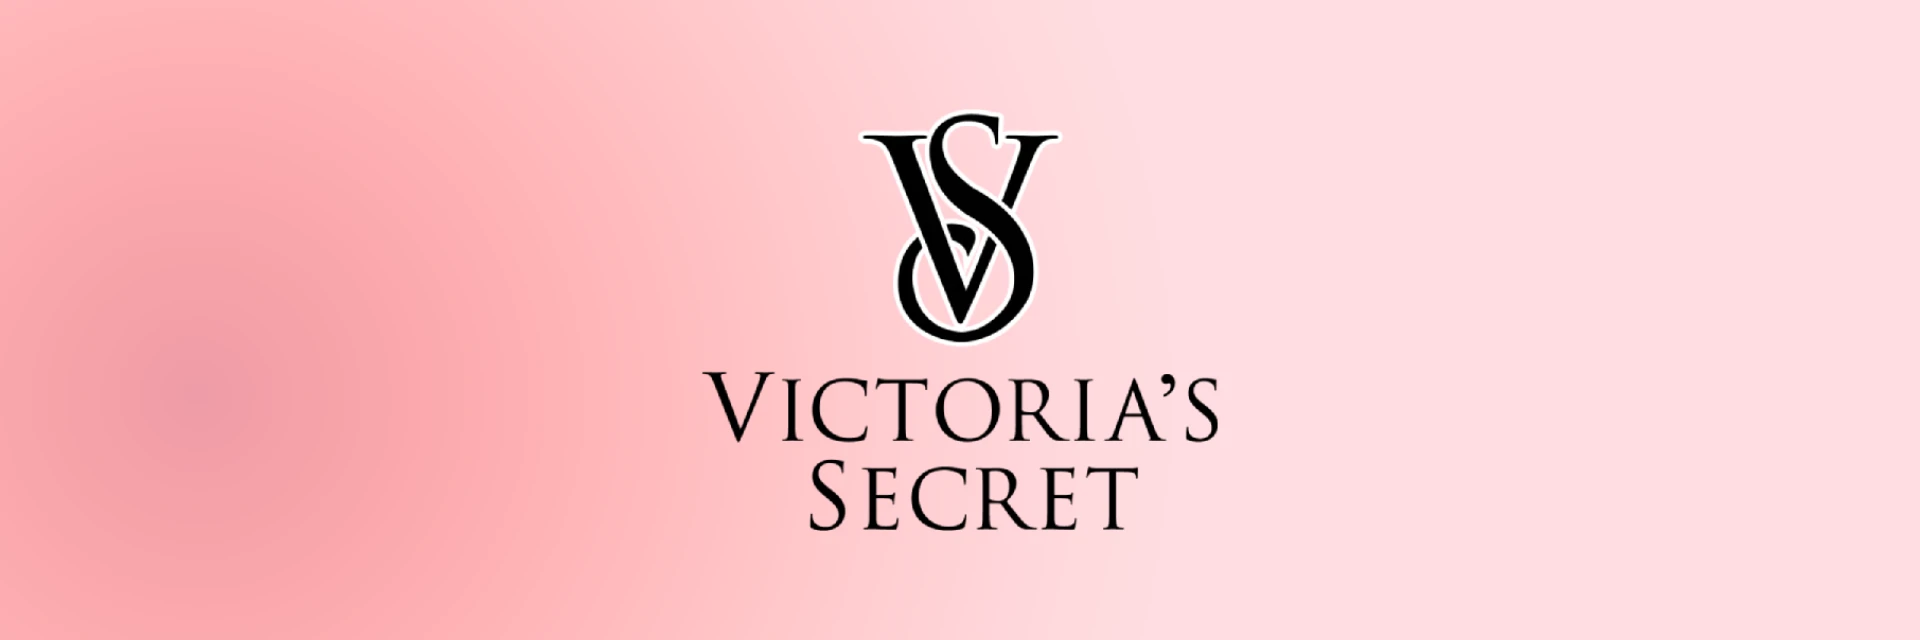 Victoria's Secret Perfume brand banner image